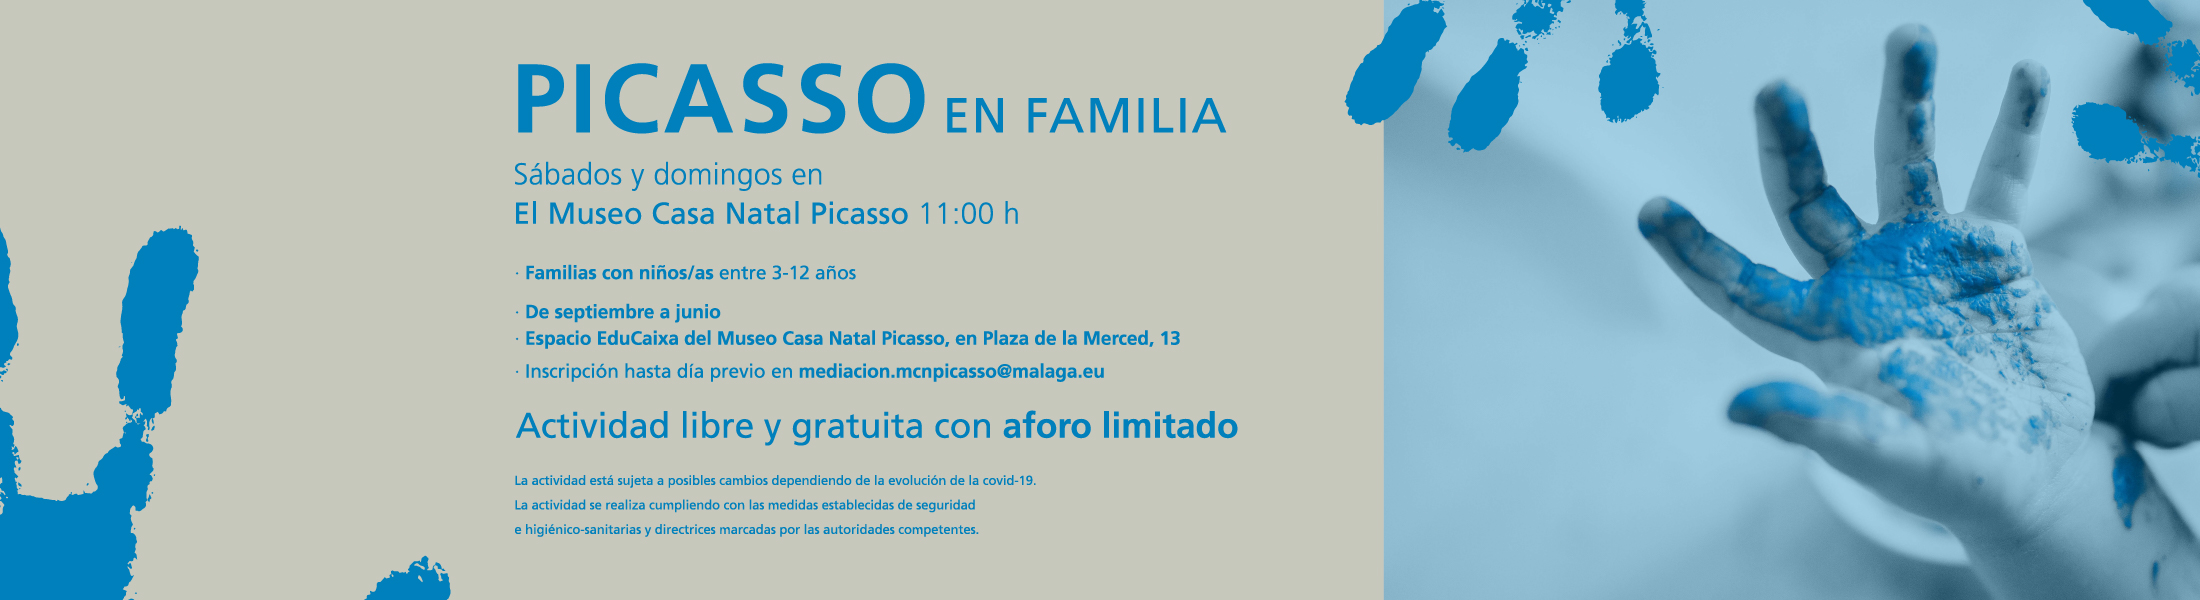 2022 Picasso en familia_BANNER (2)